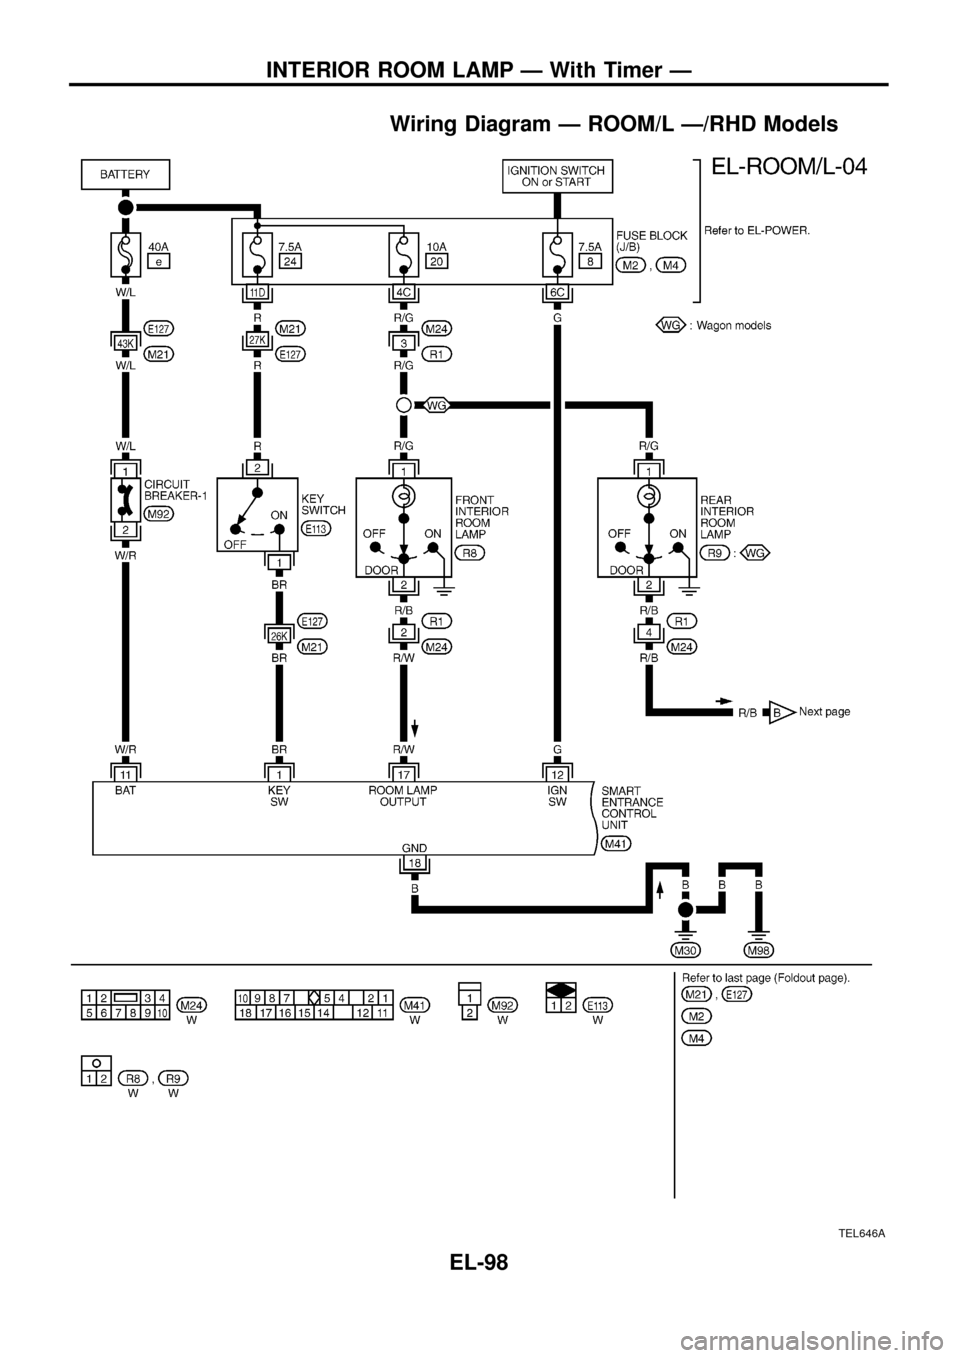 NISSAN PATROL 1998 Y61 / 5.G Electrical System Service Manual Wiring Diagram Ð ROOM/L Ð/RHD Models
TEL646A
INTERIOR ROOM LAMP Ð With Timer Ð
EL-98 